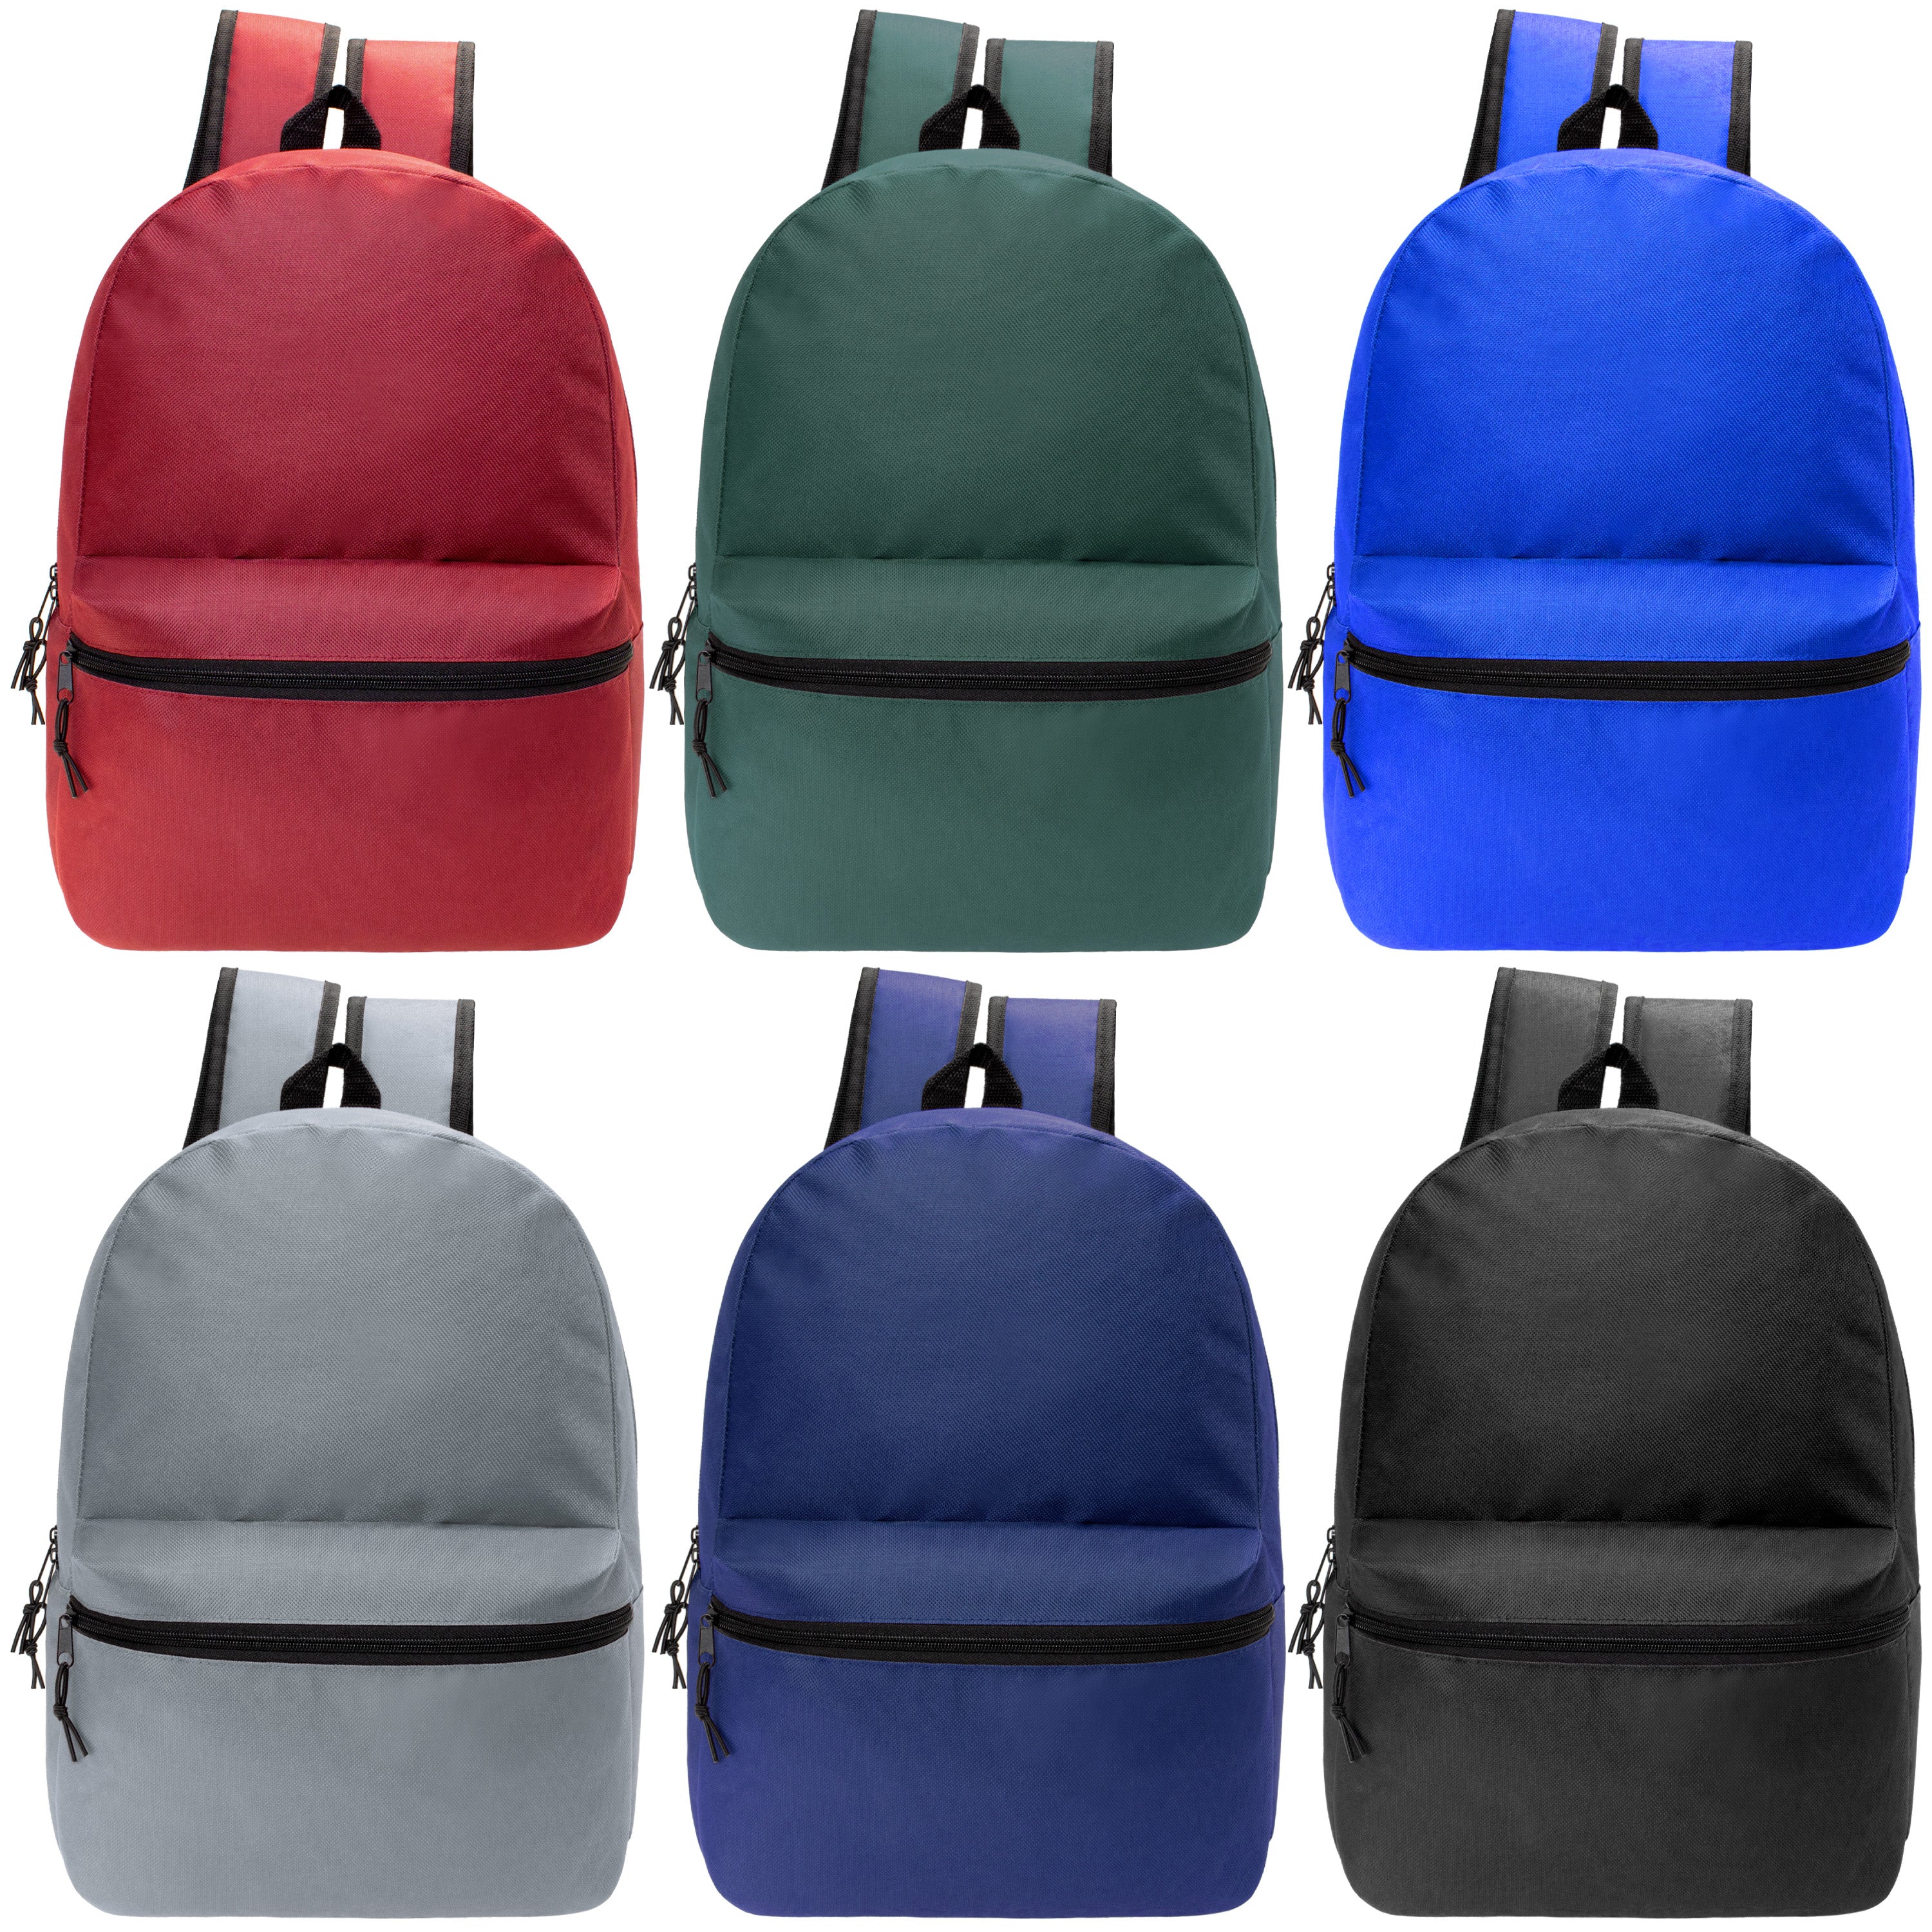 18.5" Basic Wholesale Backpack in 6 Colors - Bulk Case of 24